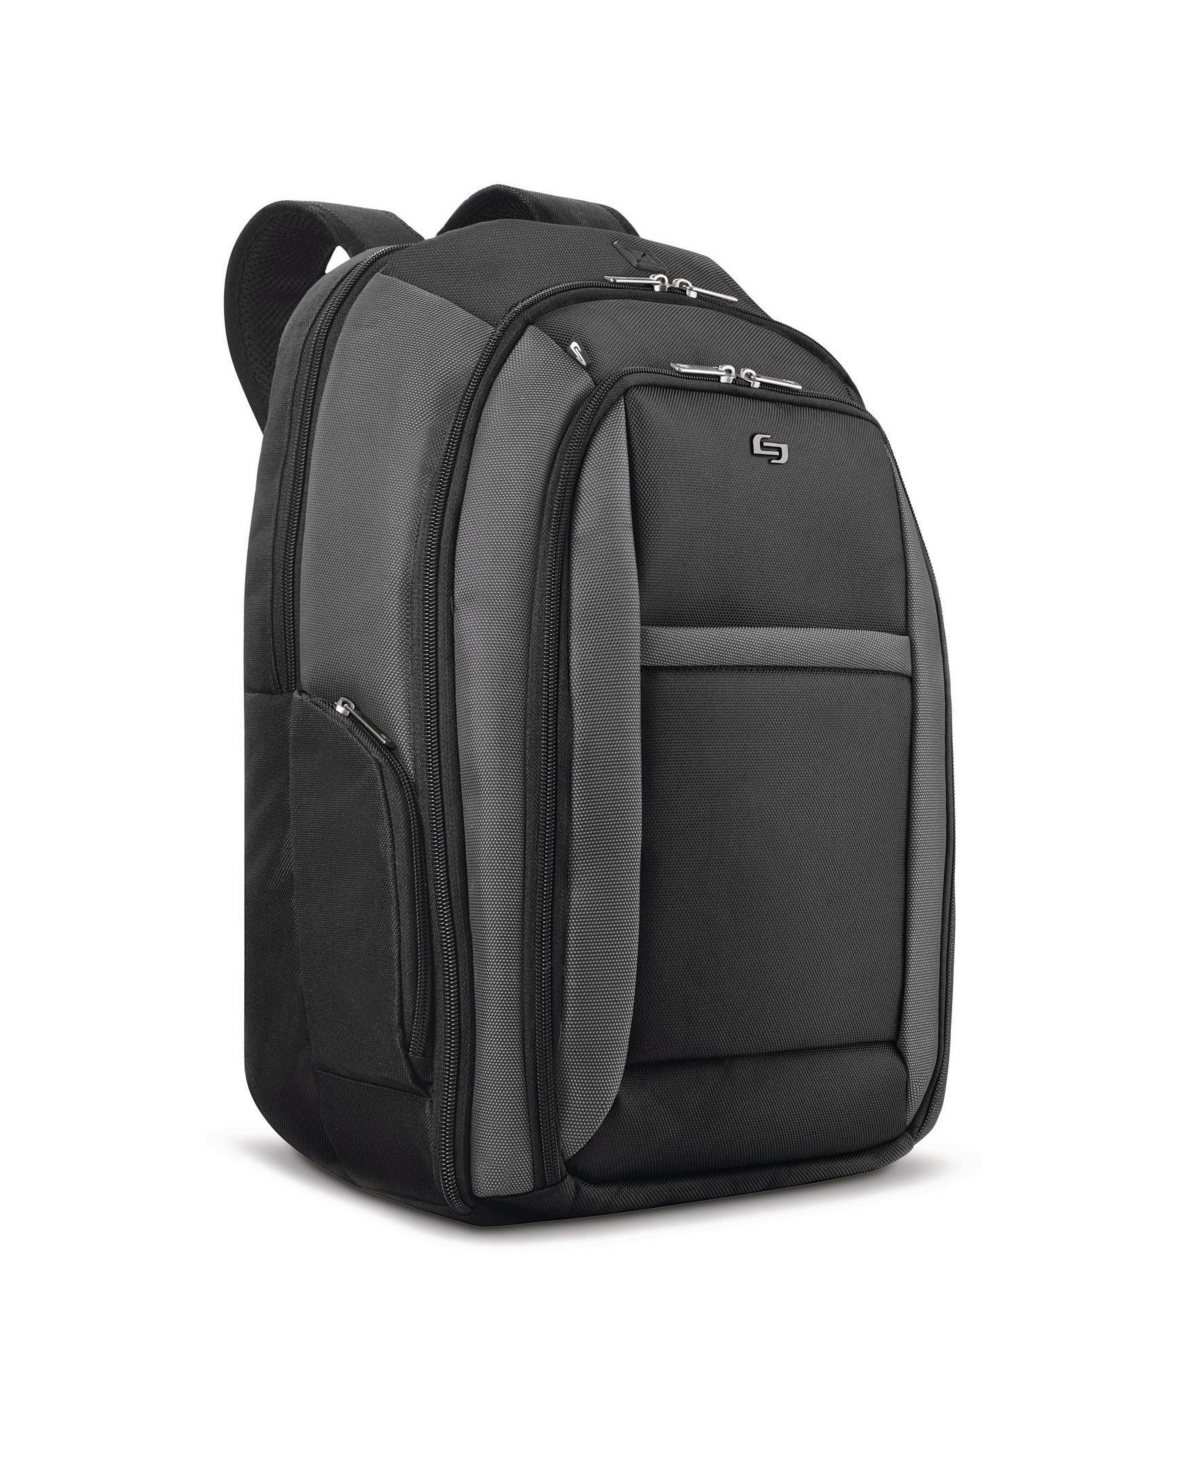 New York Metropolitan 16" Backpack - Black with Gray Birdseye Trim